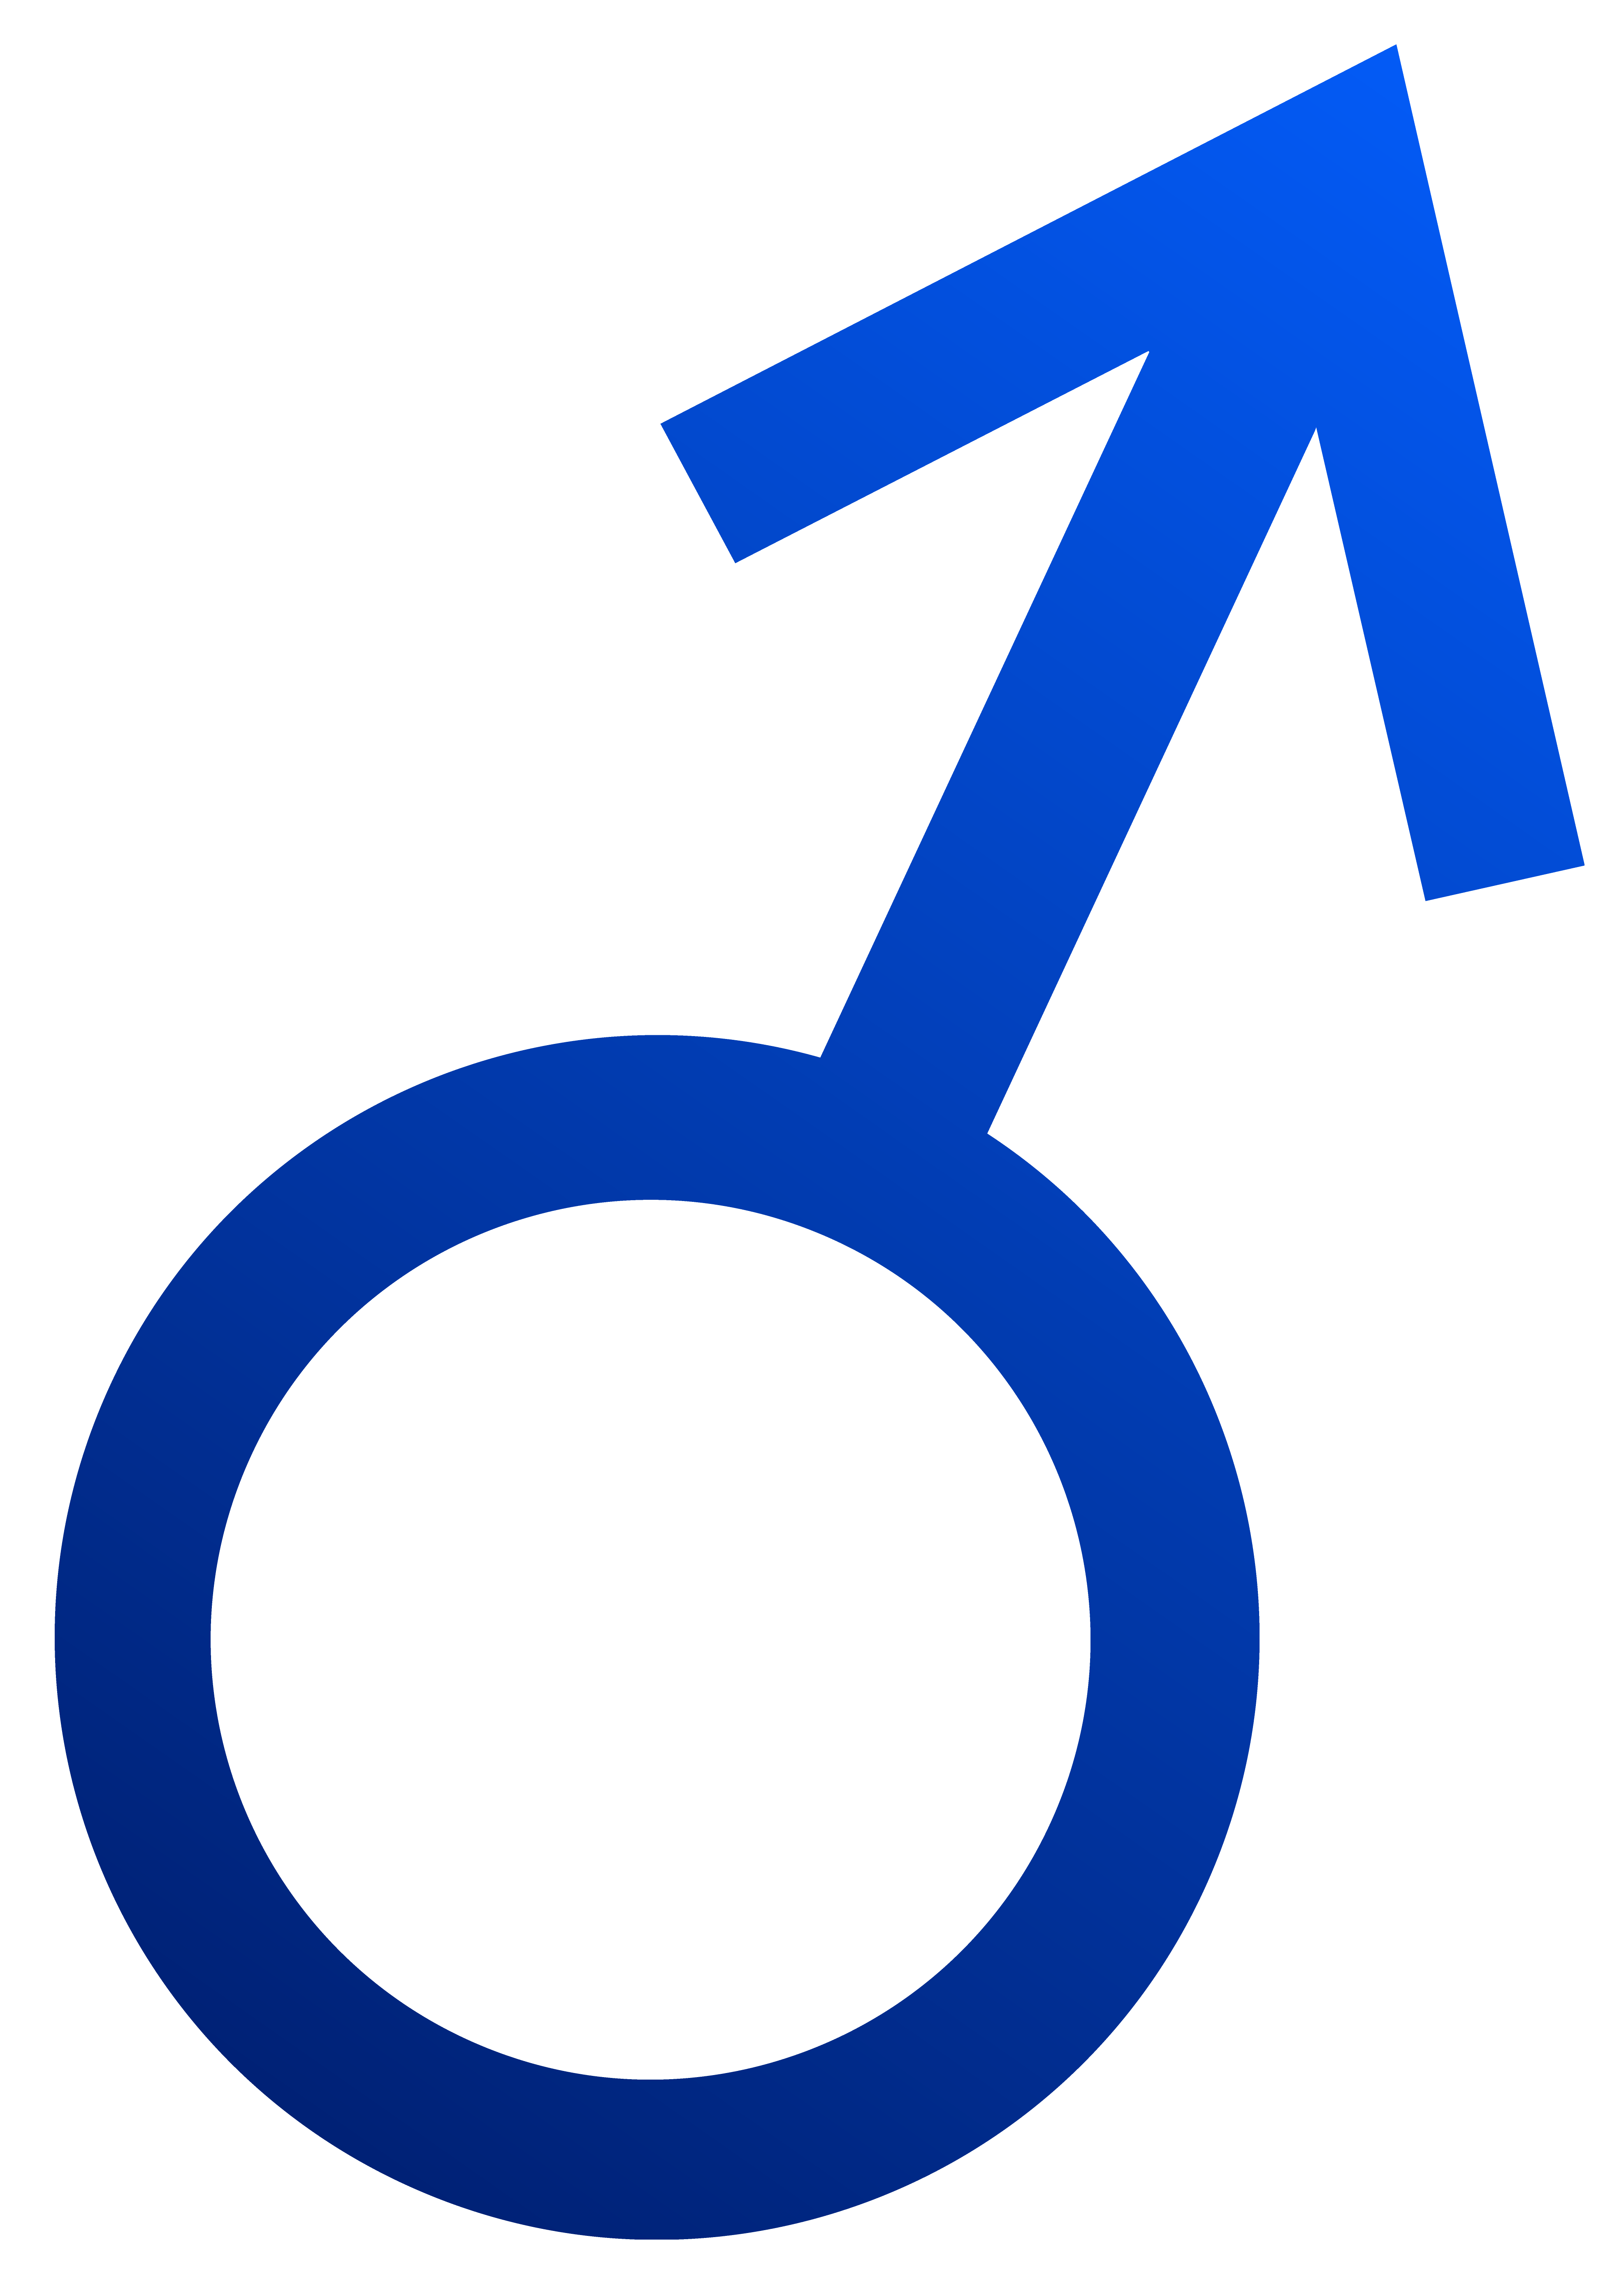 boys symbol